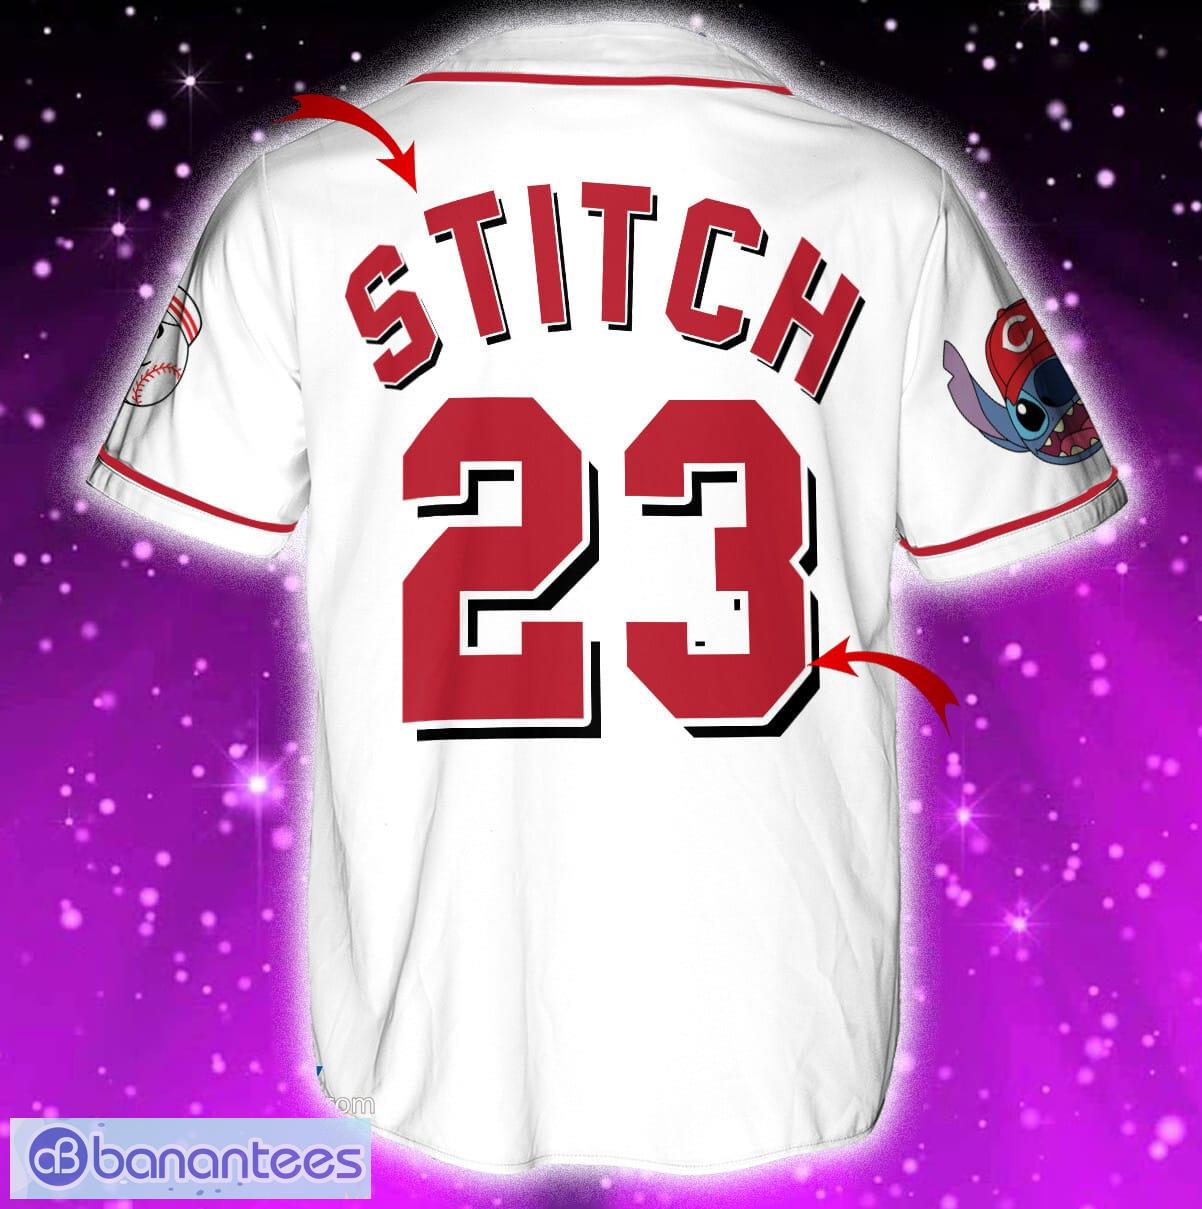 Limited Edition Cincinnati Reds Lilo & Stitch Baseball Jersey in Red - Scesy